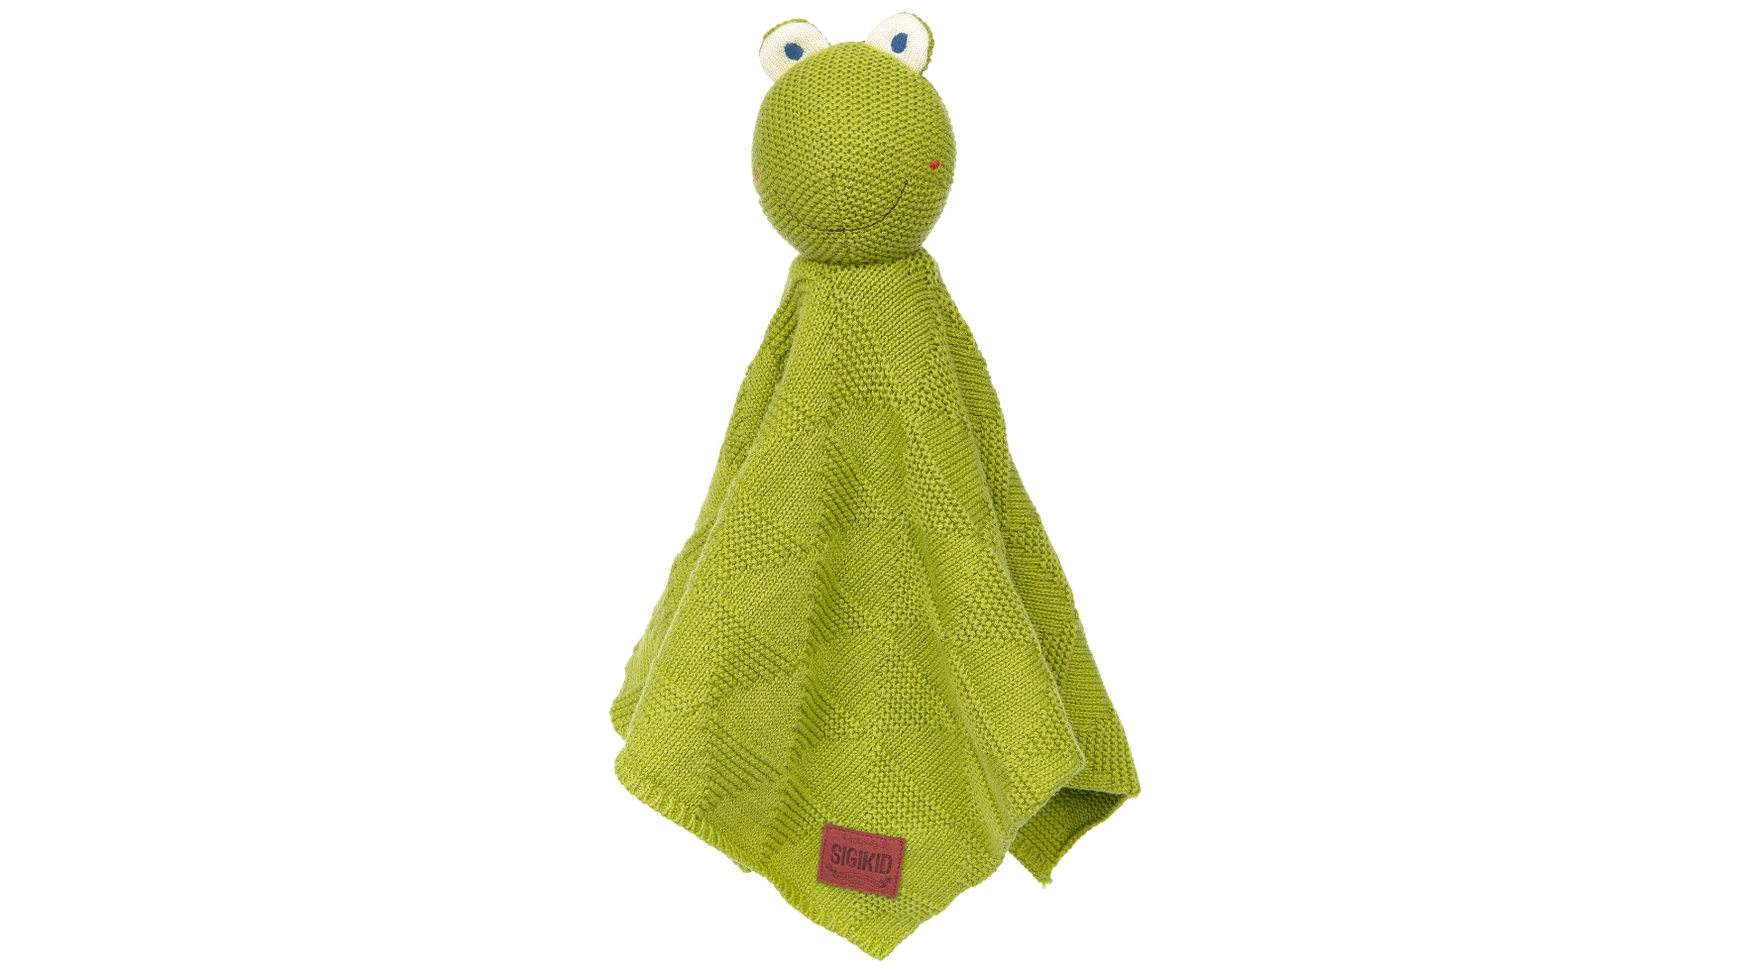 Детское вязаное одеяло-лягушка Sigikid